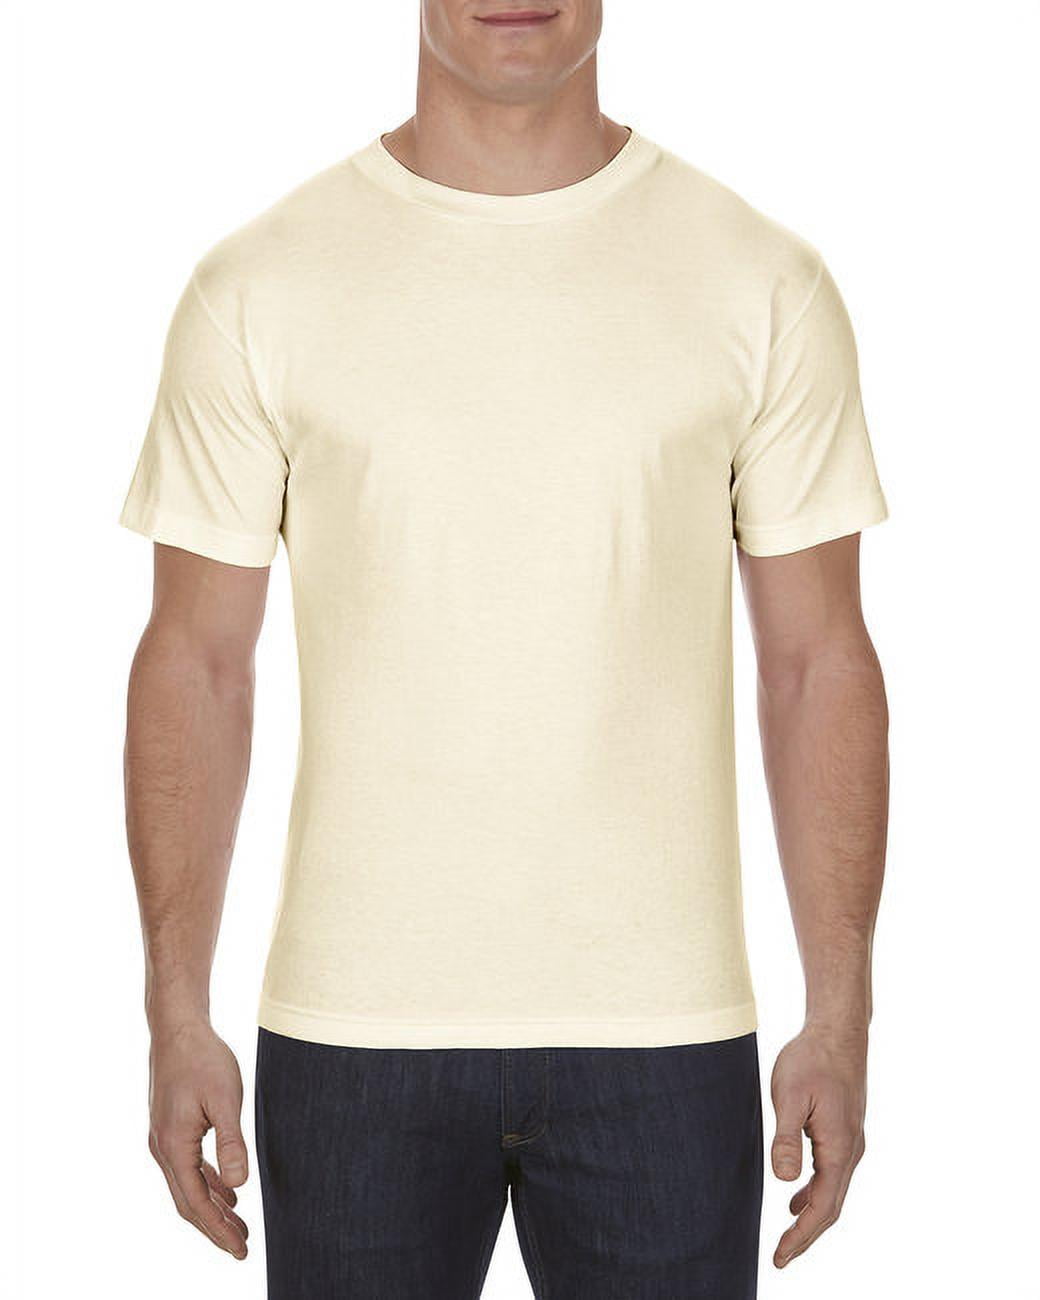 American Apparel B10027189 Heavyweight Cotton T-Shirt, Red - 4XL